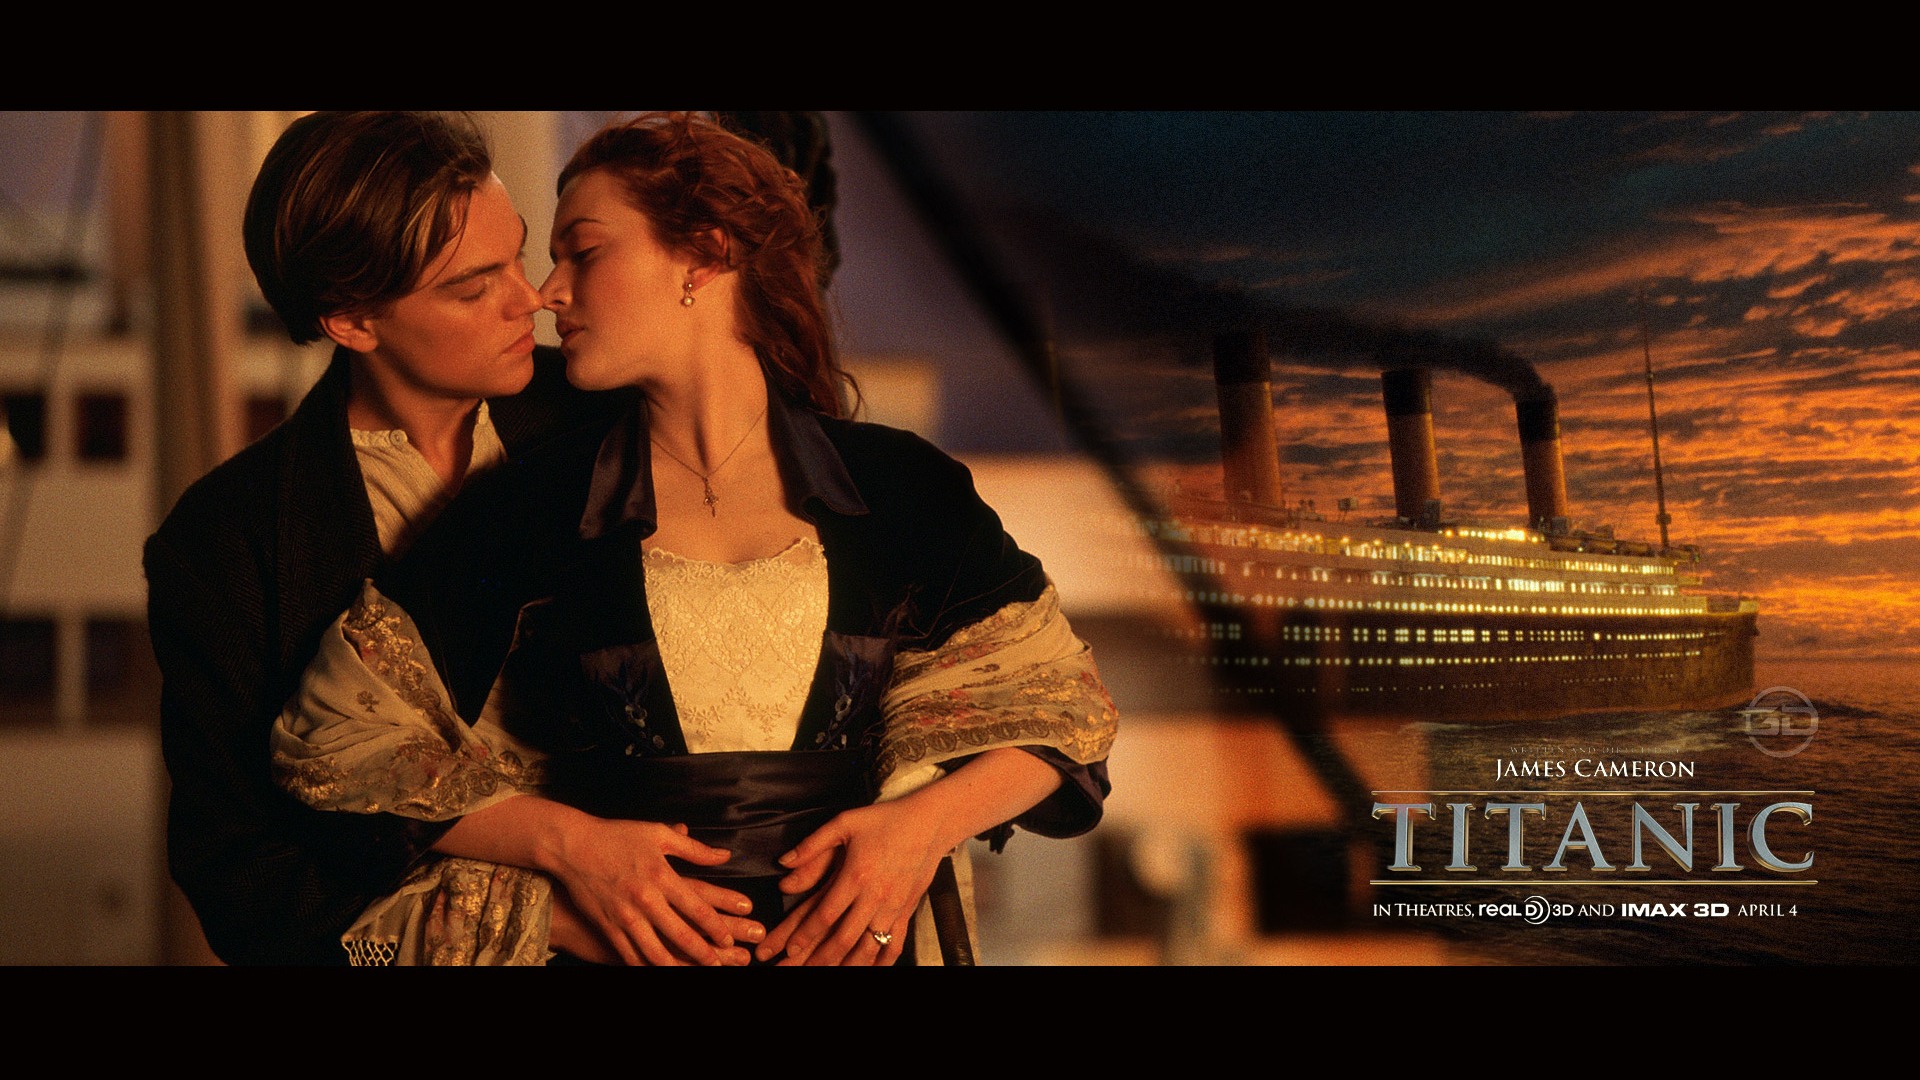 Titanic Theme Song Movie Songs Tv Soundtracks